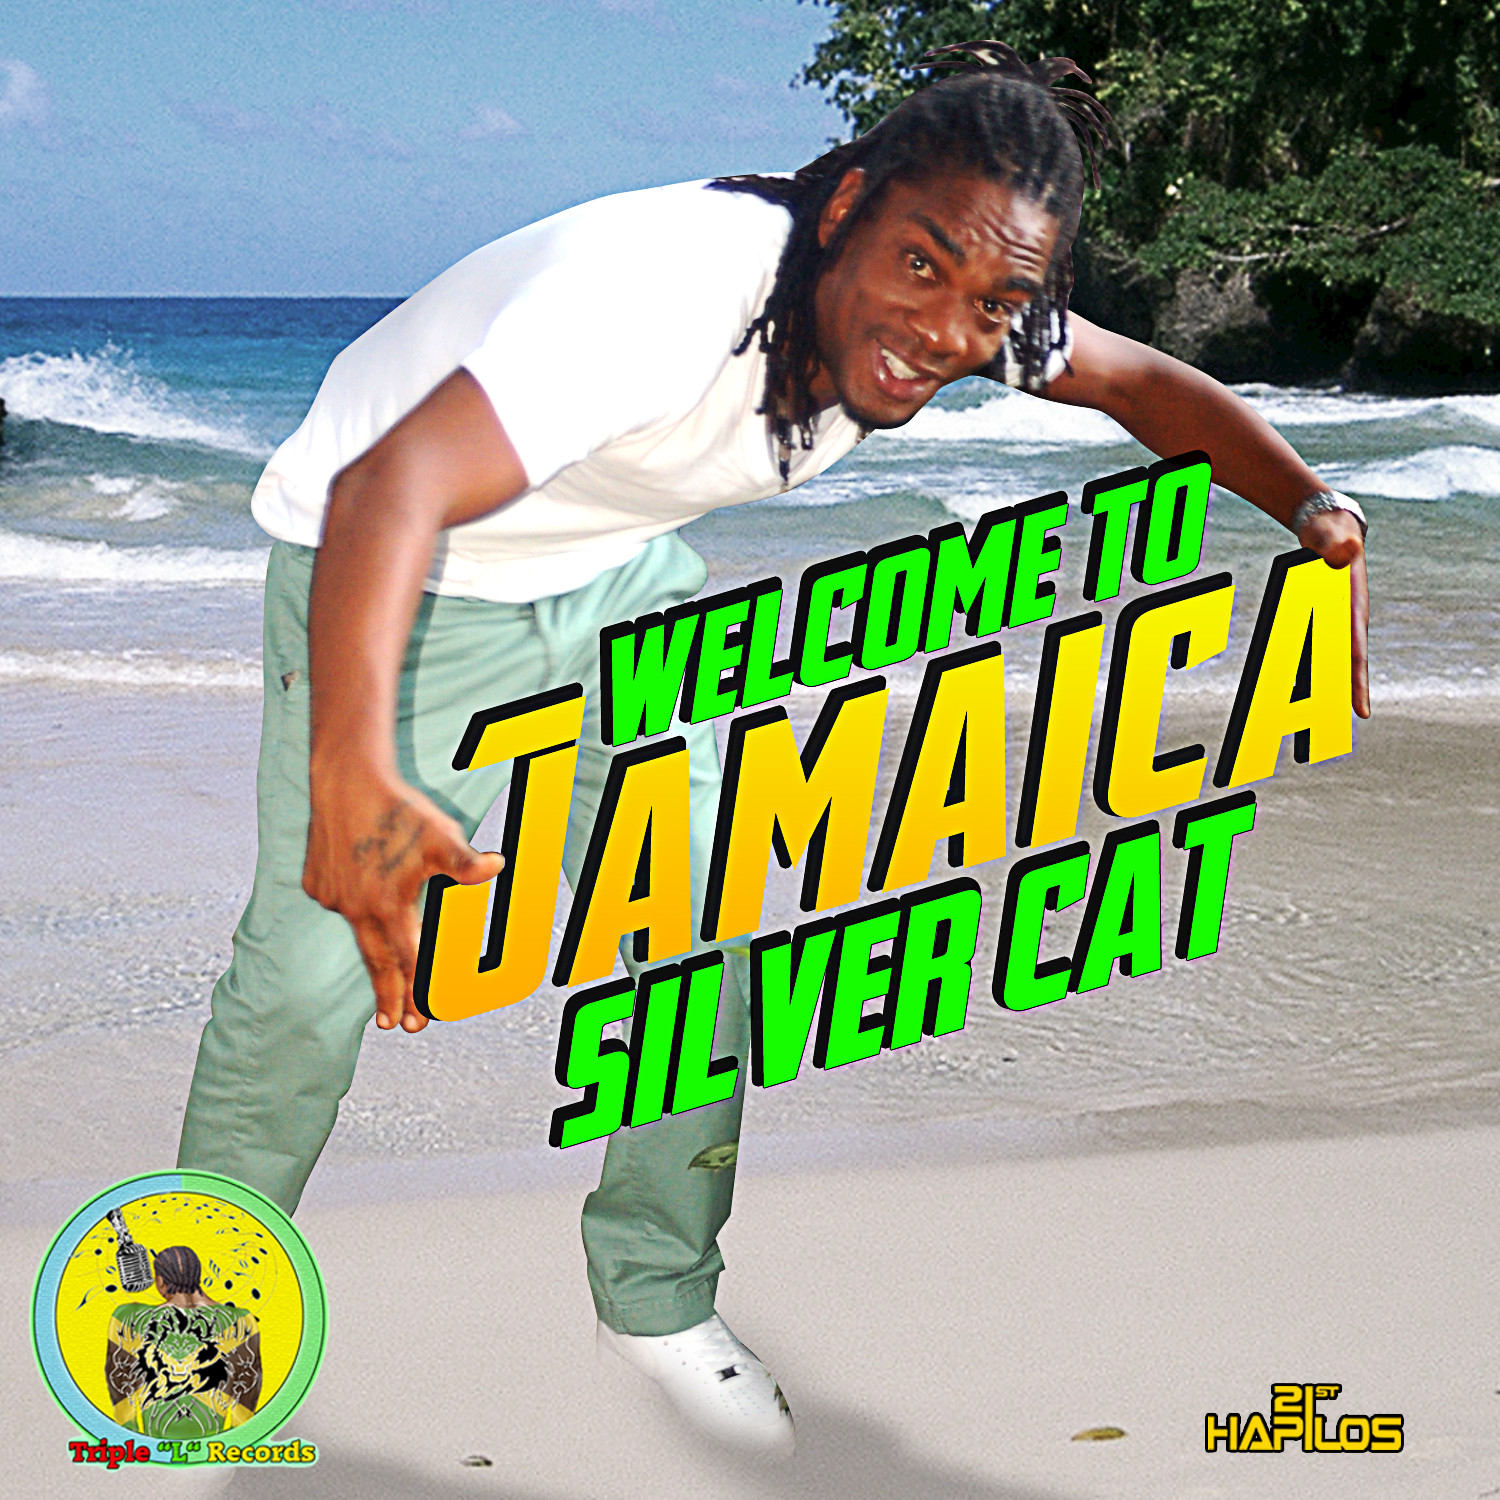 Welcome To Jamaica